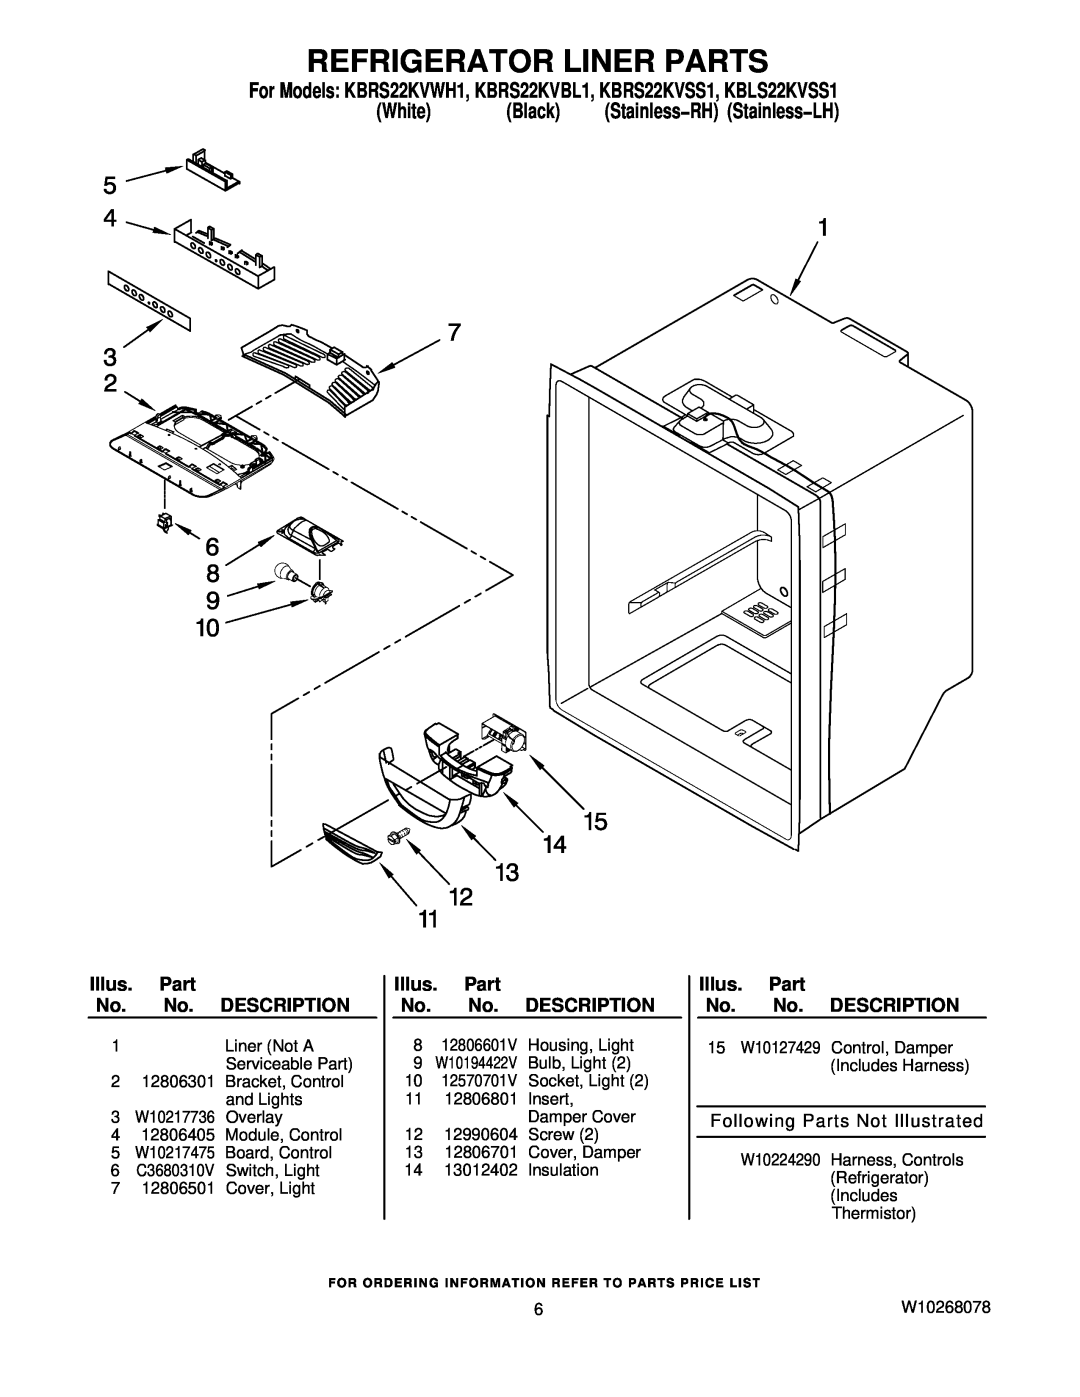 KitchenAid manual Refrigerator Liner Parts, For Models KBRS22KVWH1, KBRS22KVBL1, KBRS22KVSS1, KBLS22KVSS1, White, Black 